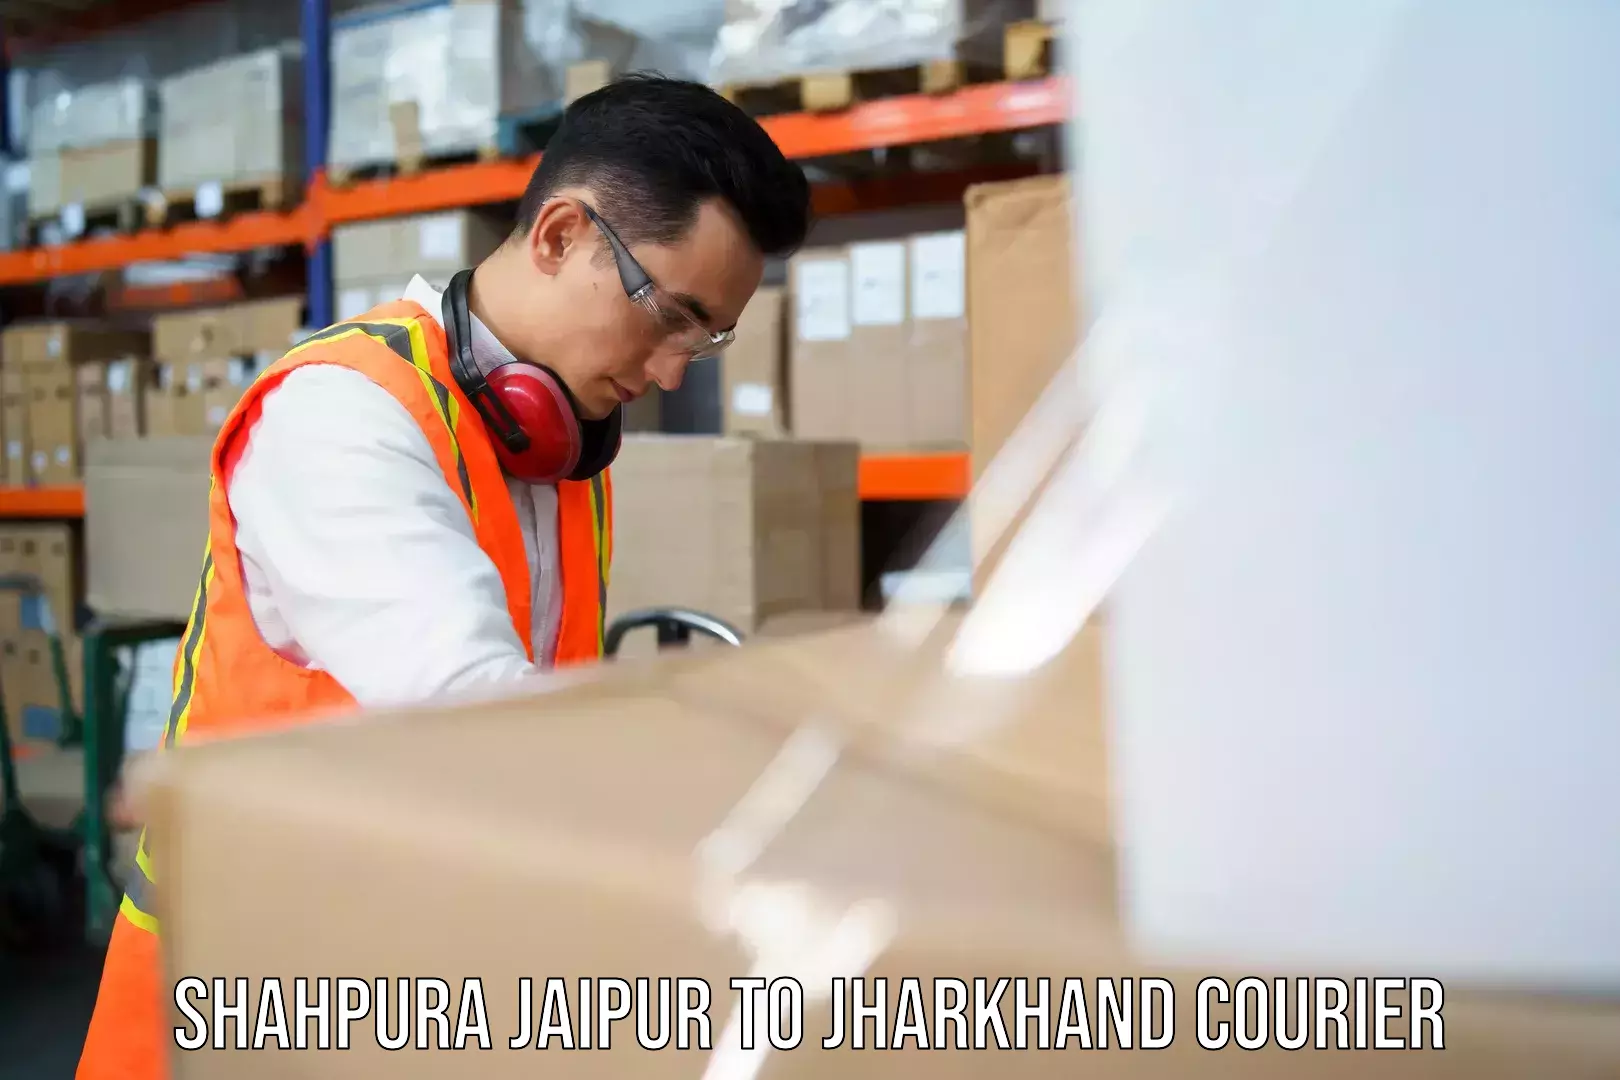 Doorstep delivery service Shahpura Jaipur to Jamshedpur